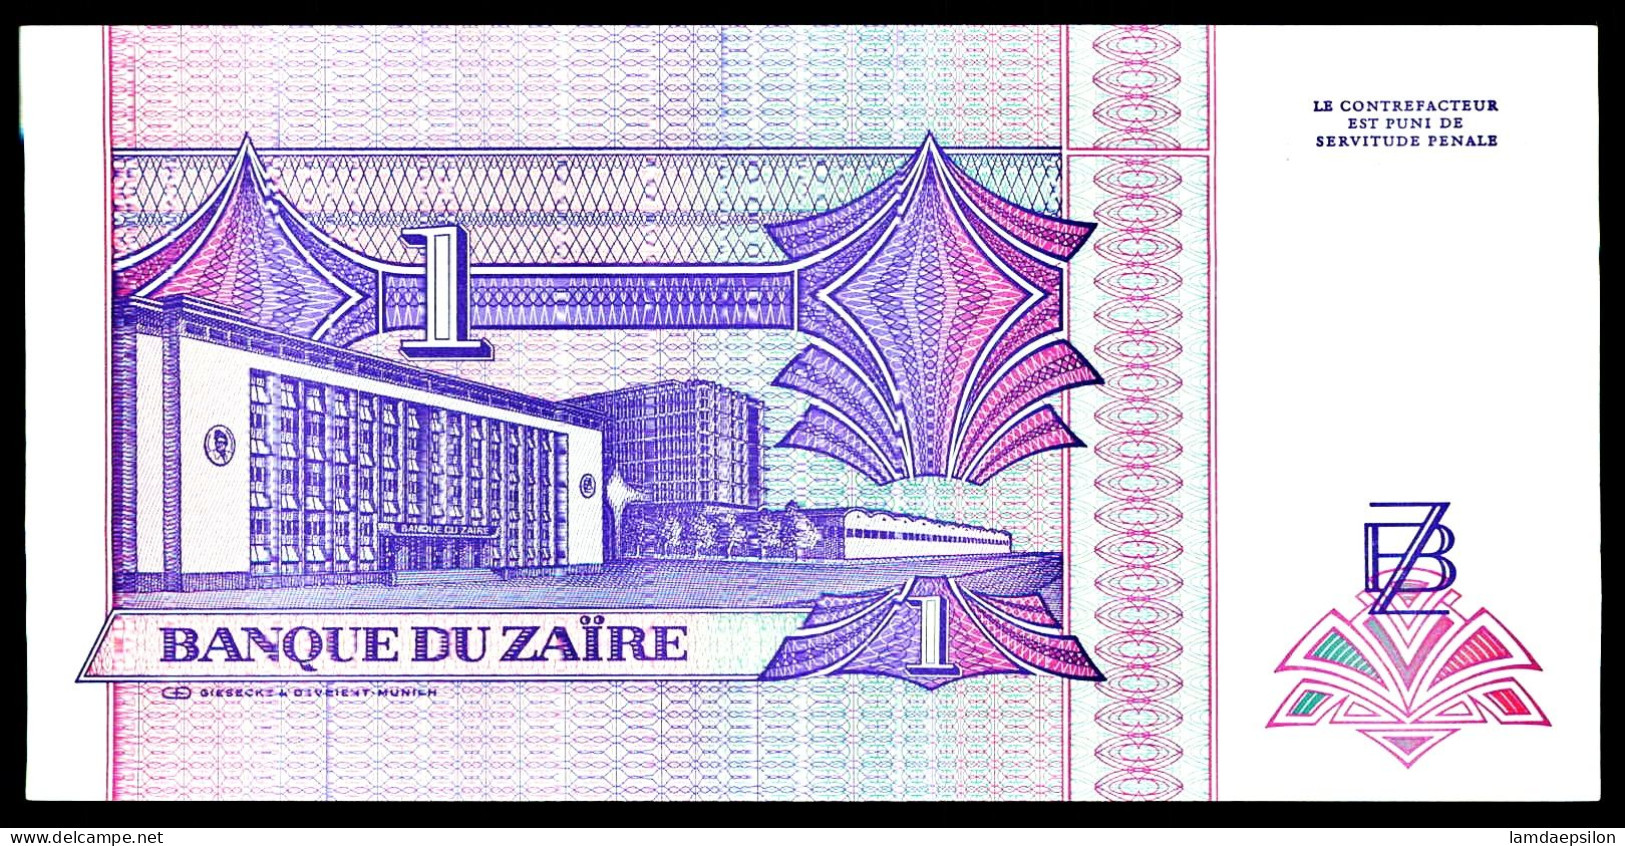 A9  ZAIRE    BILLETS DU MONDE    BANKNOTES  1 ZAIRE 1993 - Zaïre